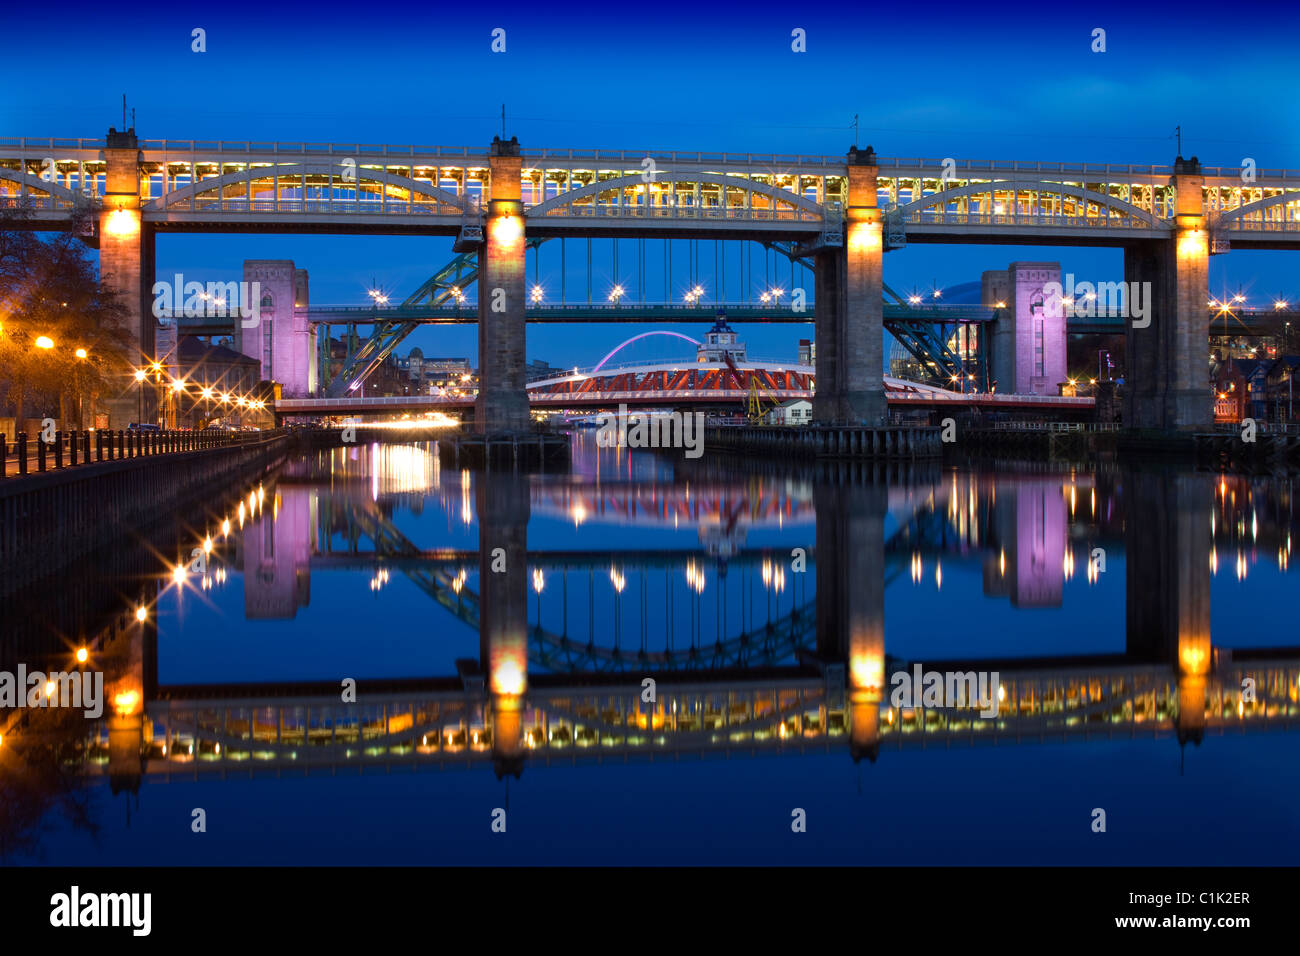 High Level Bridge et Tyne Ponts dans la nuit - Tyne Gateshead / Gateshead, Tyne et Wear, Angleterre Banque D'Images